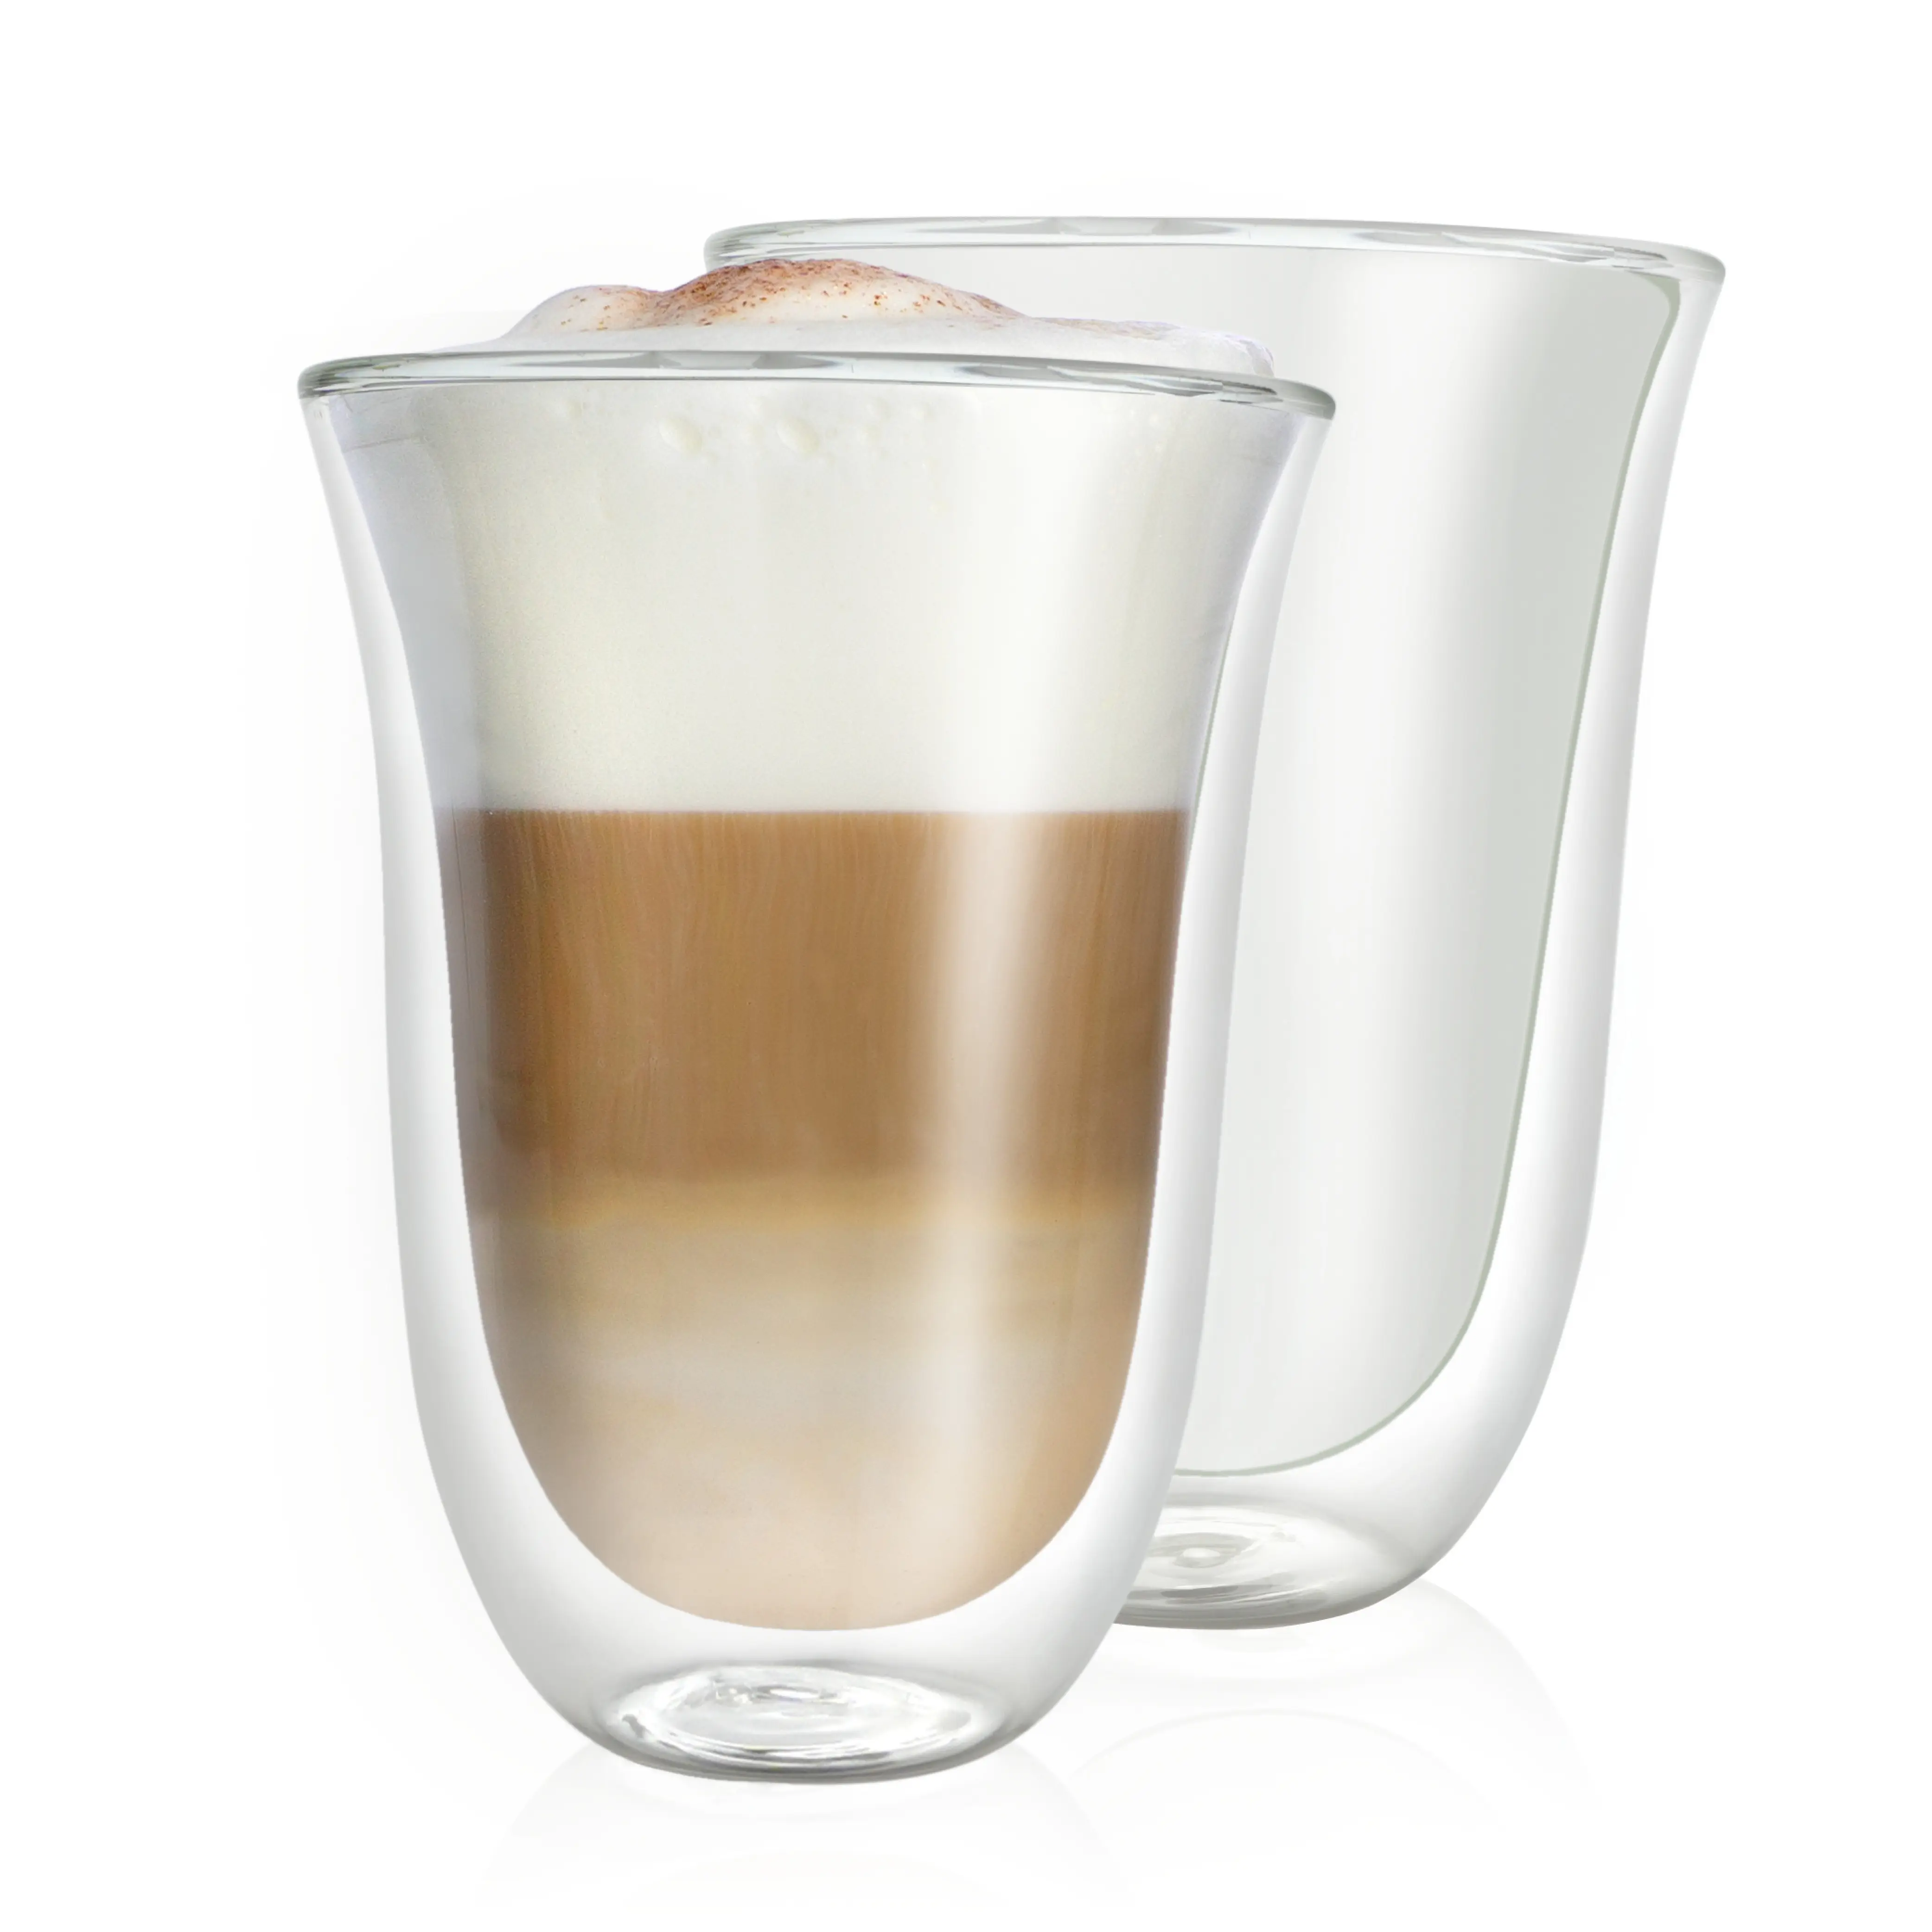 Napoli doppelwandig Kaffeegl盲ser 2x300ml